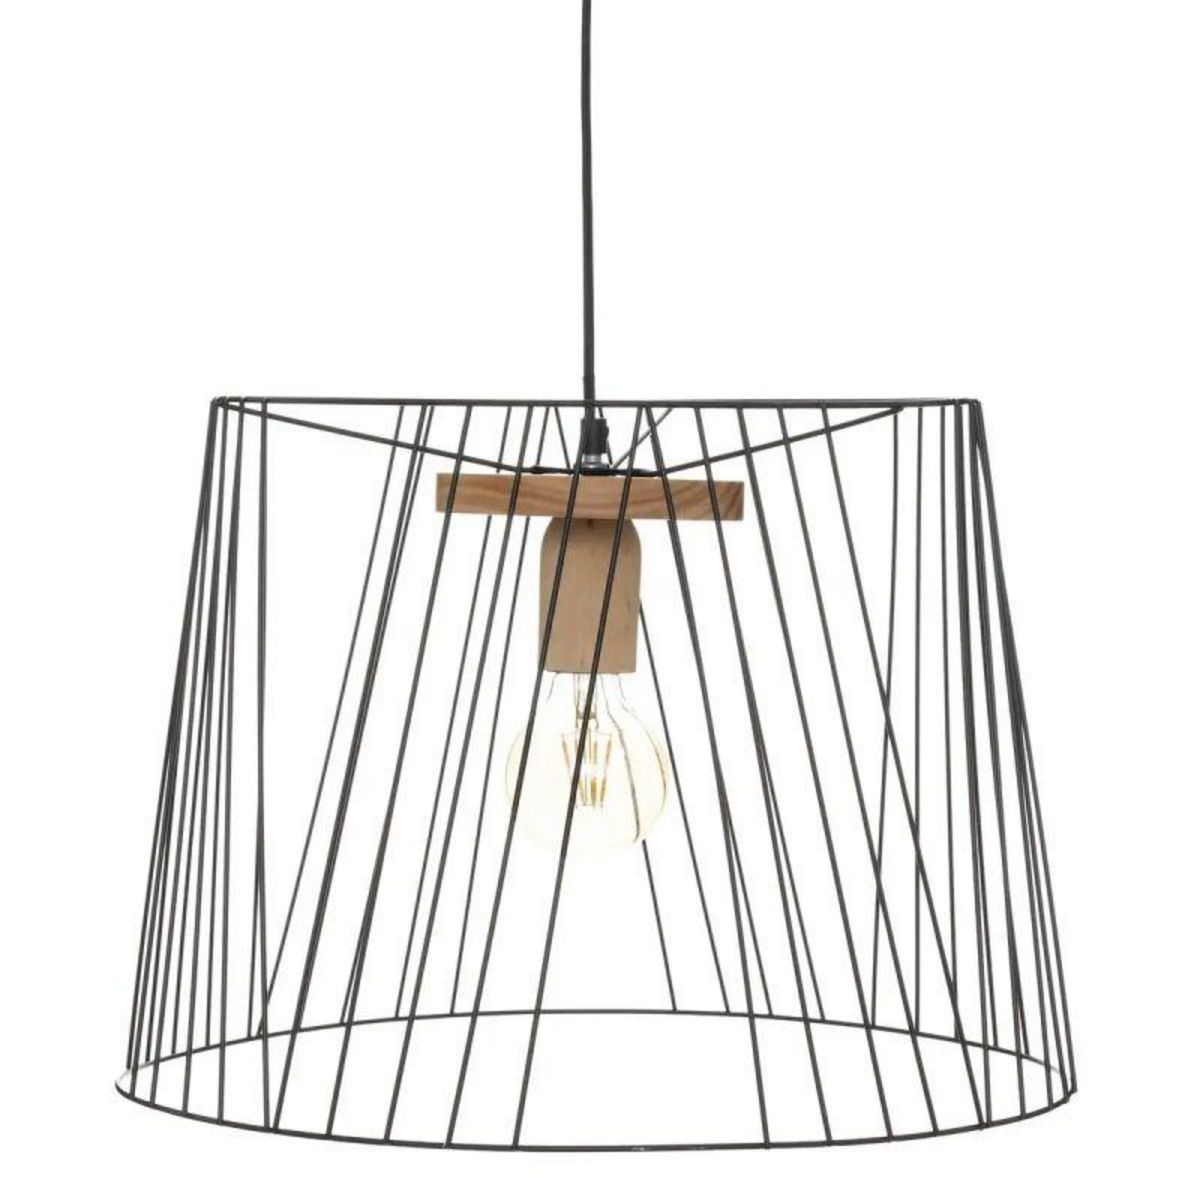  Lampe Suspension Design  Joe  44cm Noir